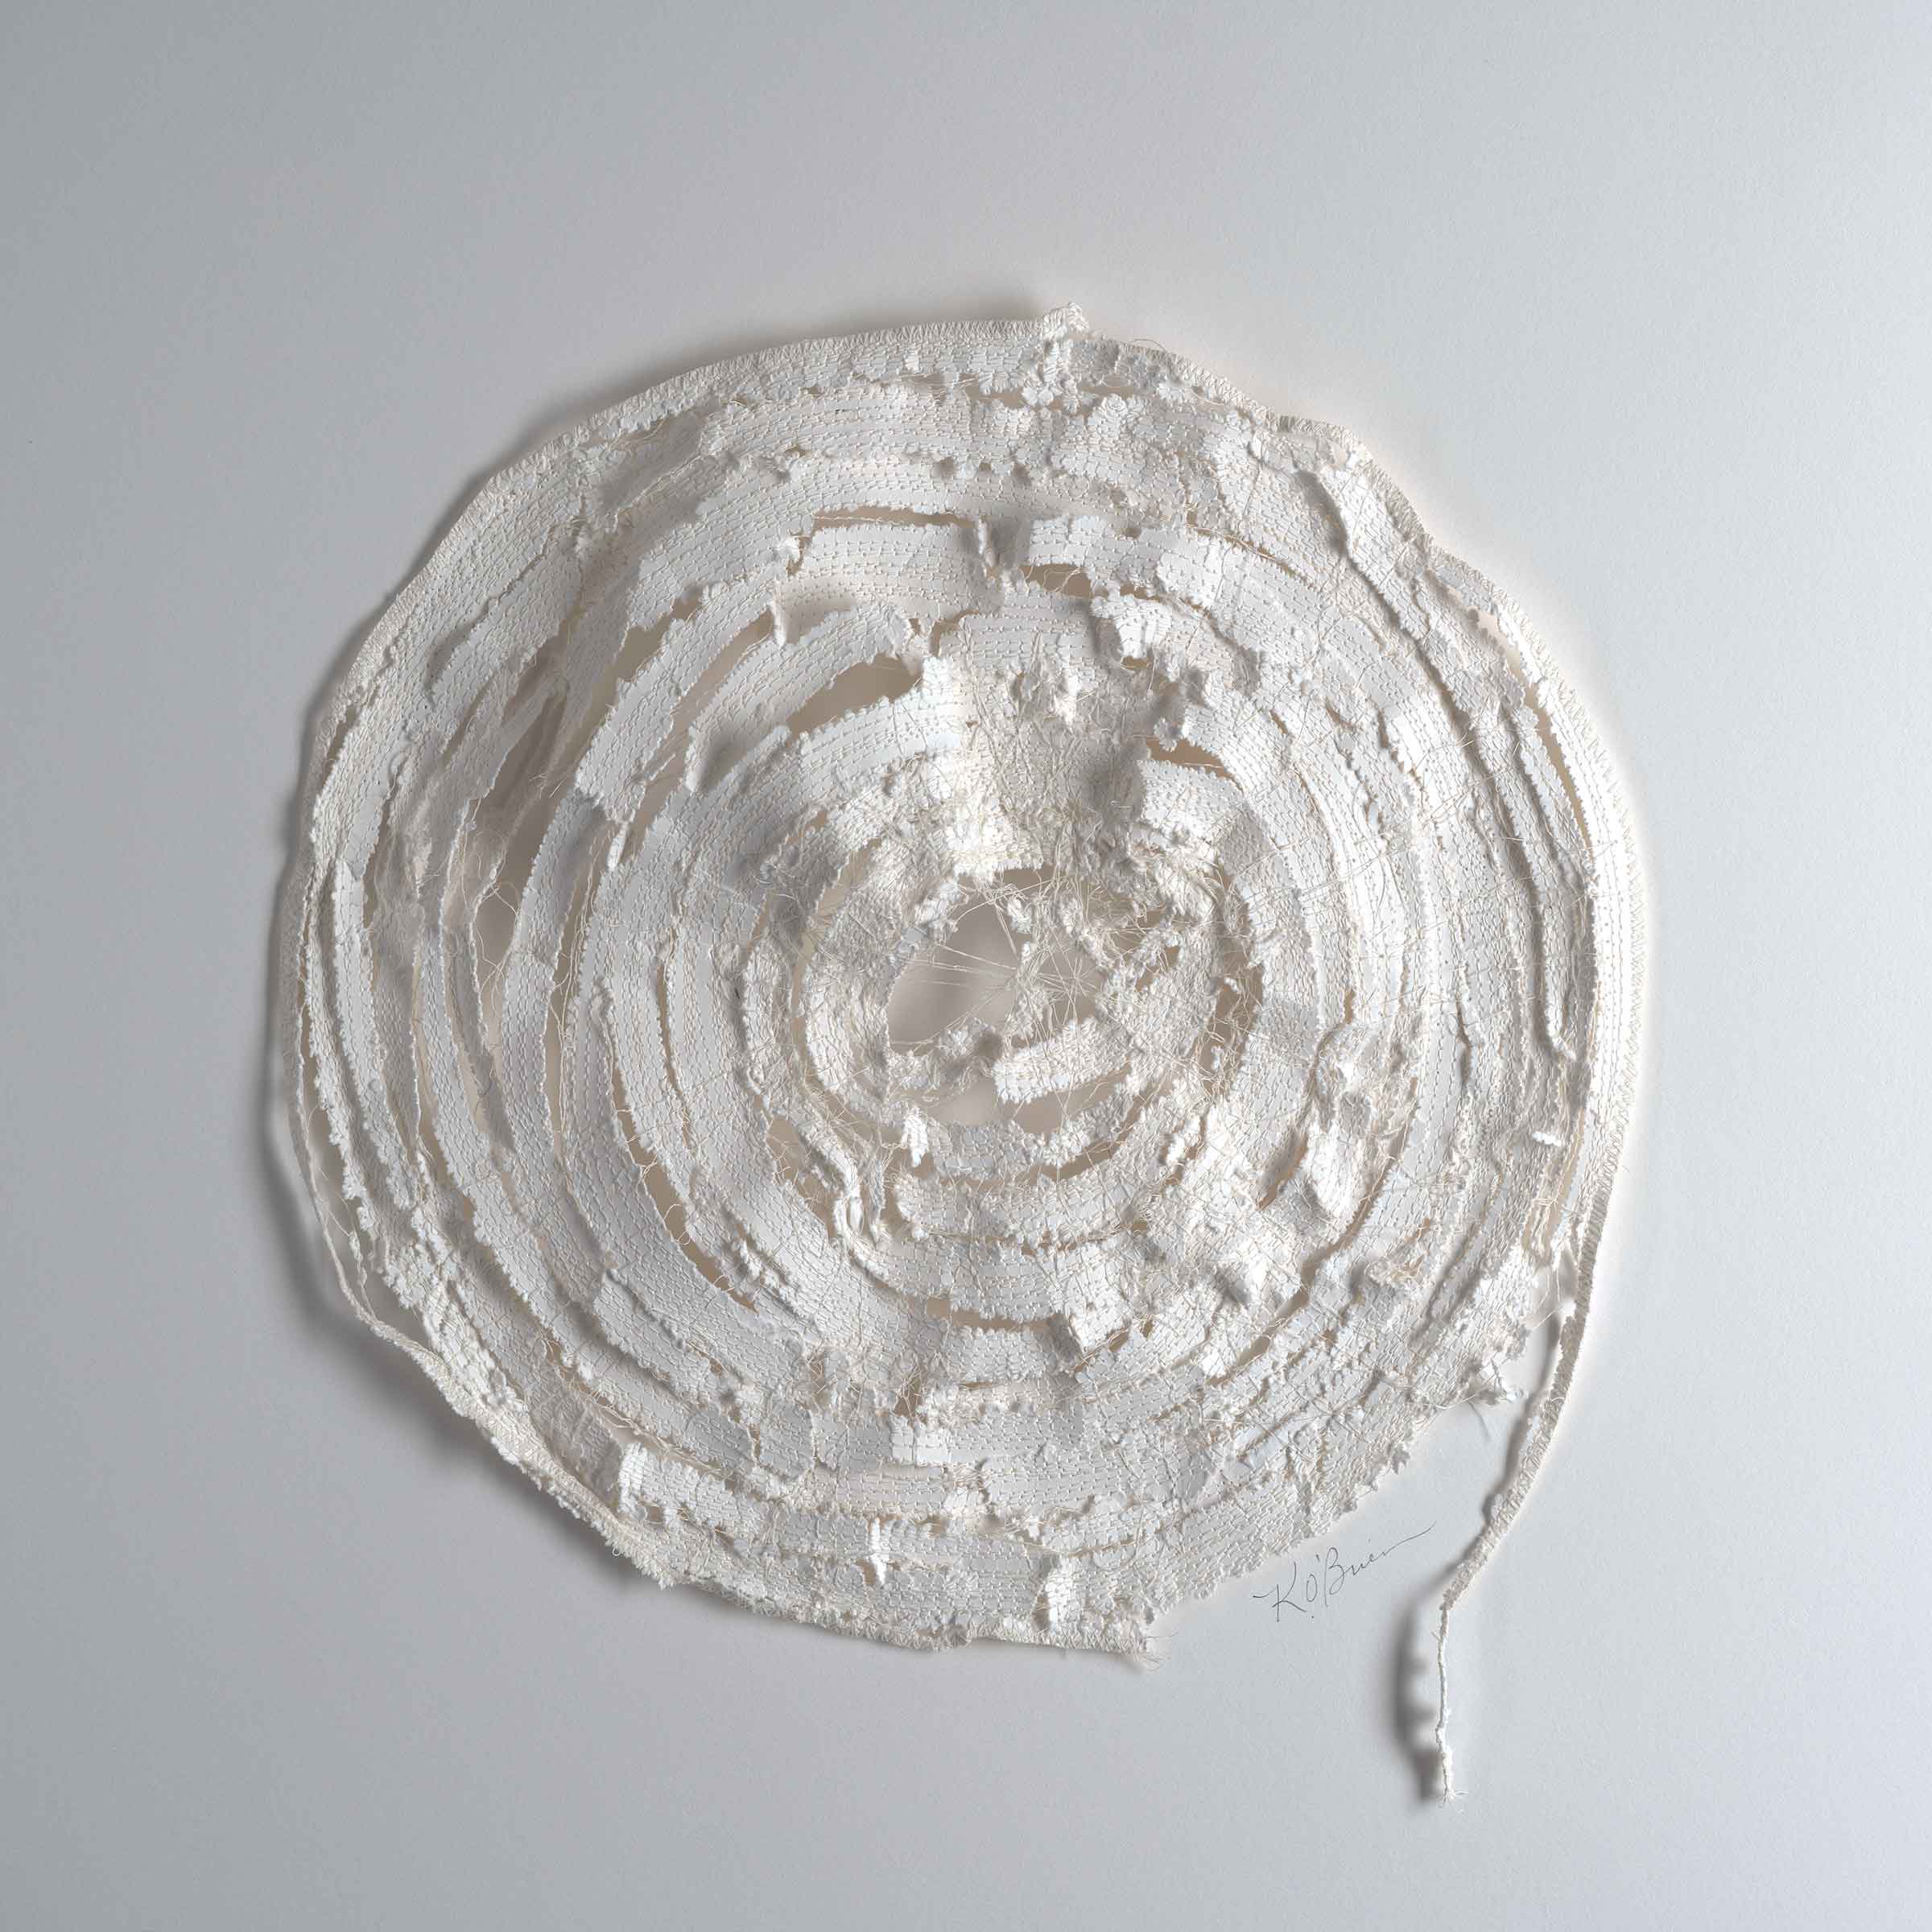  Kelly M O’Brien,  Stitch No. 1 . Paper, cotton thread. 12 x 12 in | 30 x 30 cm ©2019 